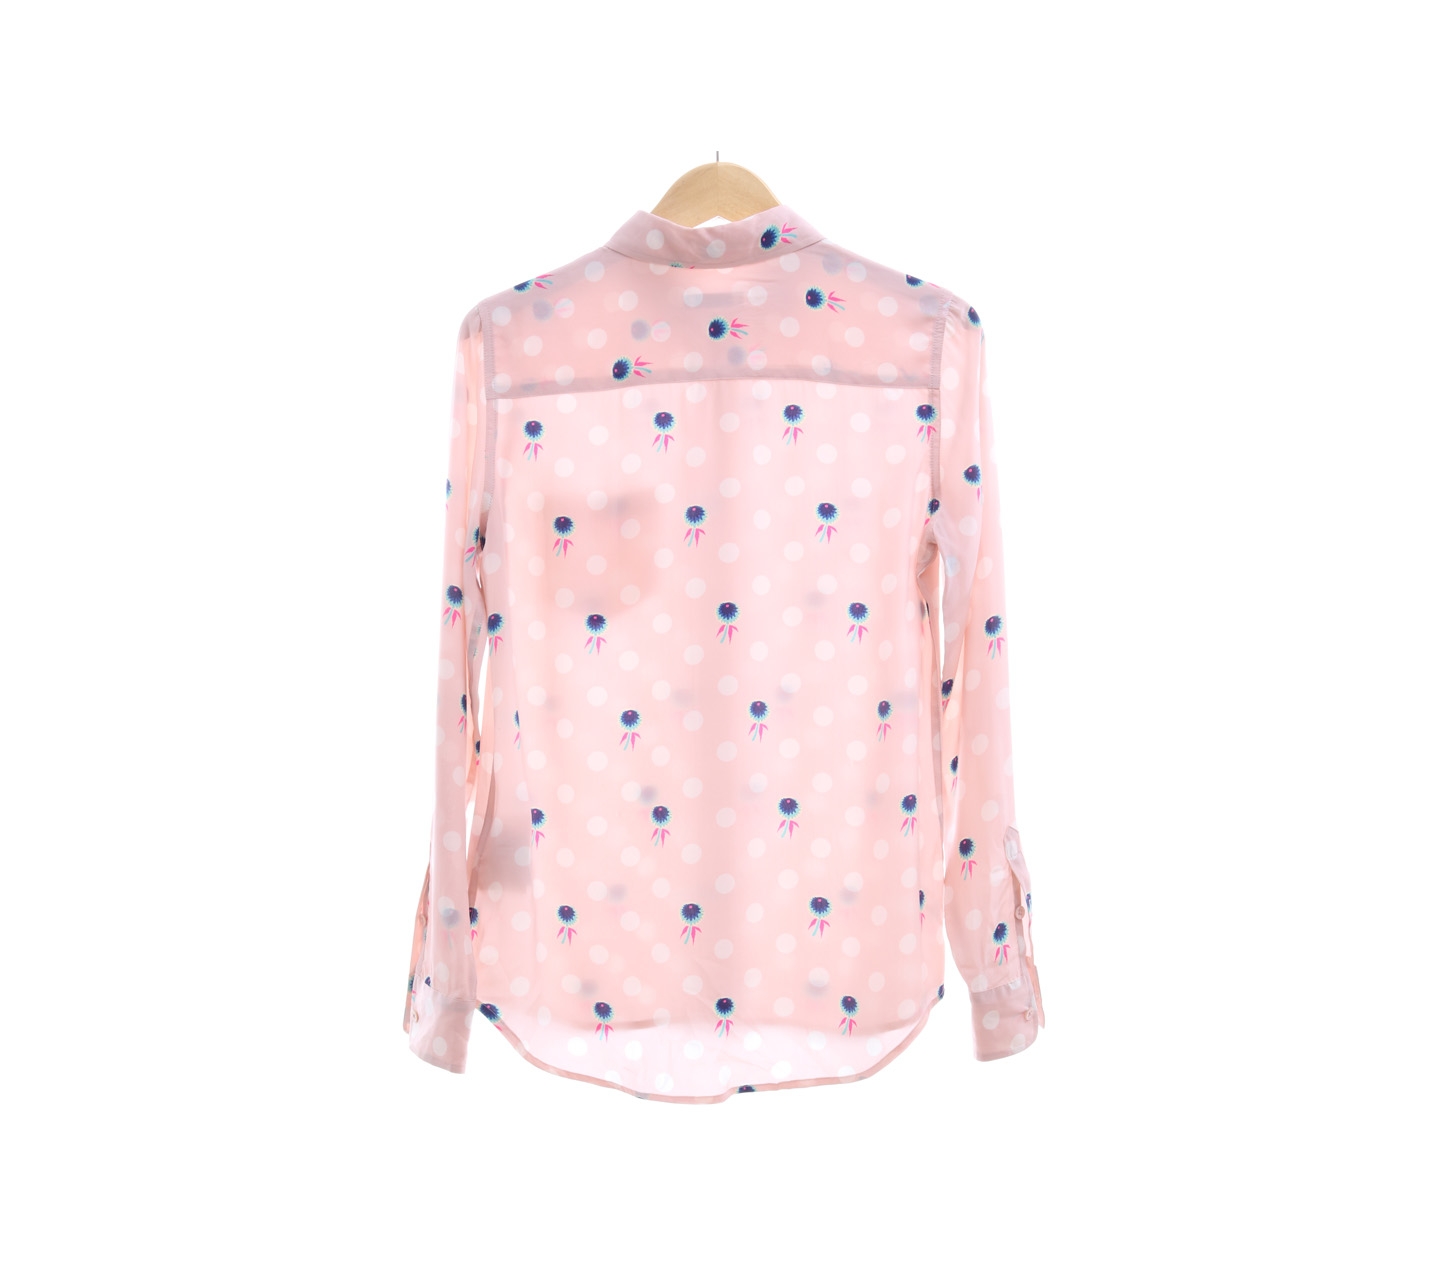 Equipment Femme Soft Pink Polkadot With Floral shirt